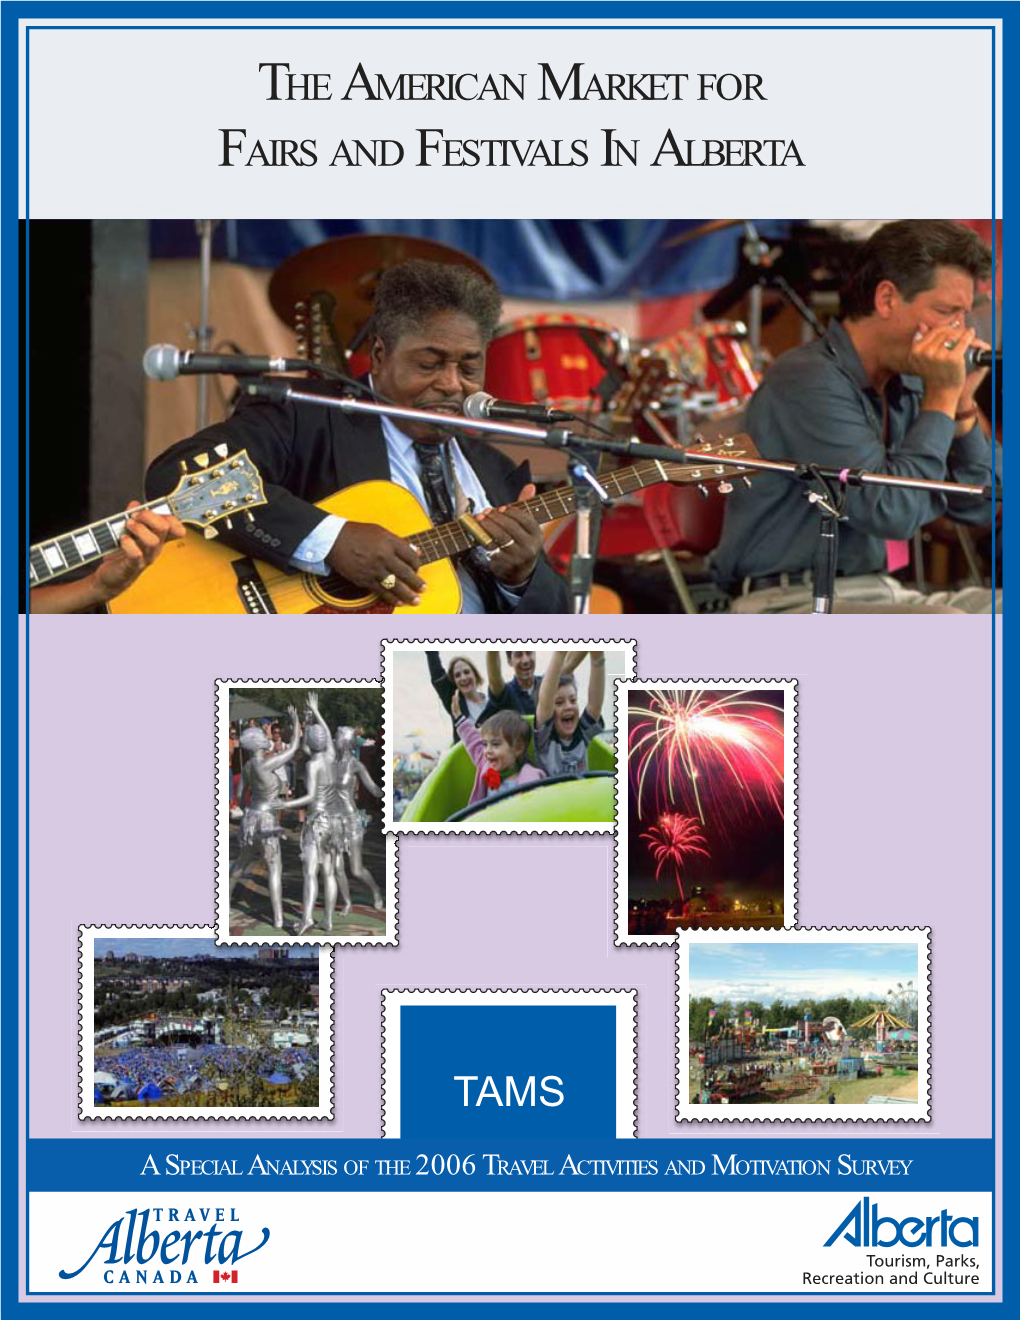 The American Market for Fairs & Festivals Tourism in Alberta